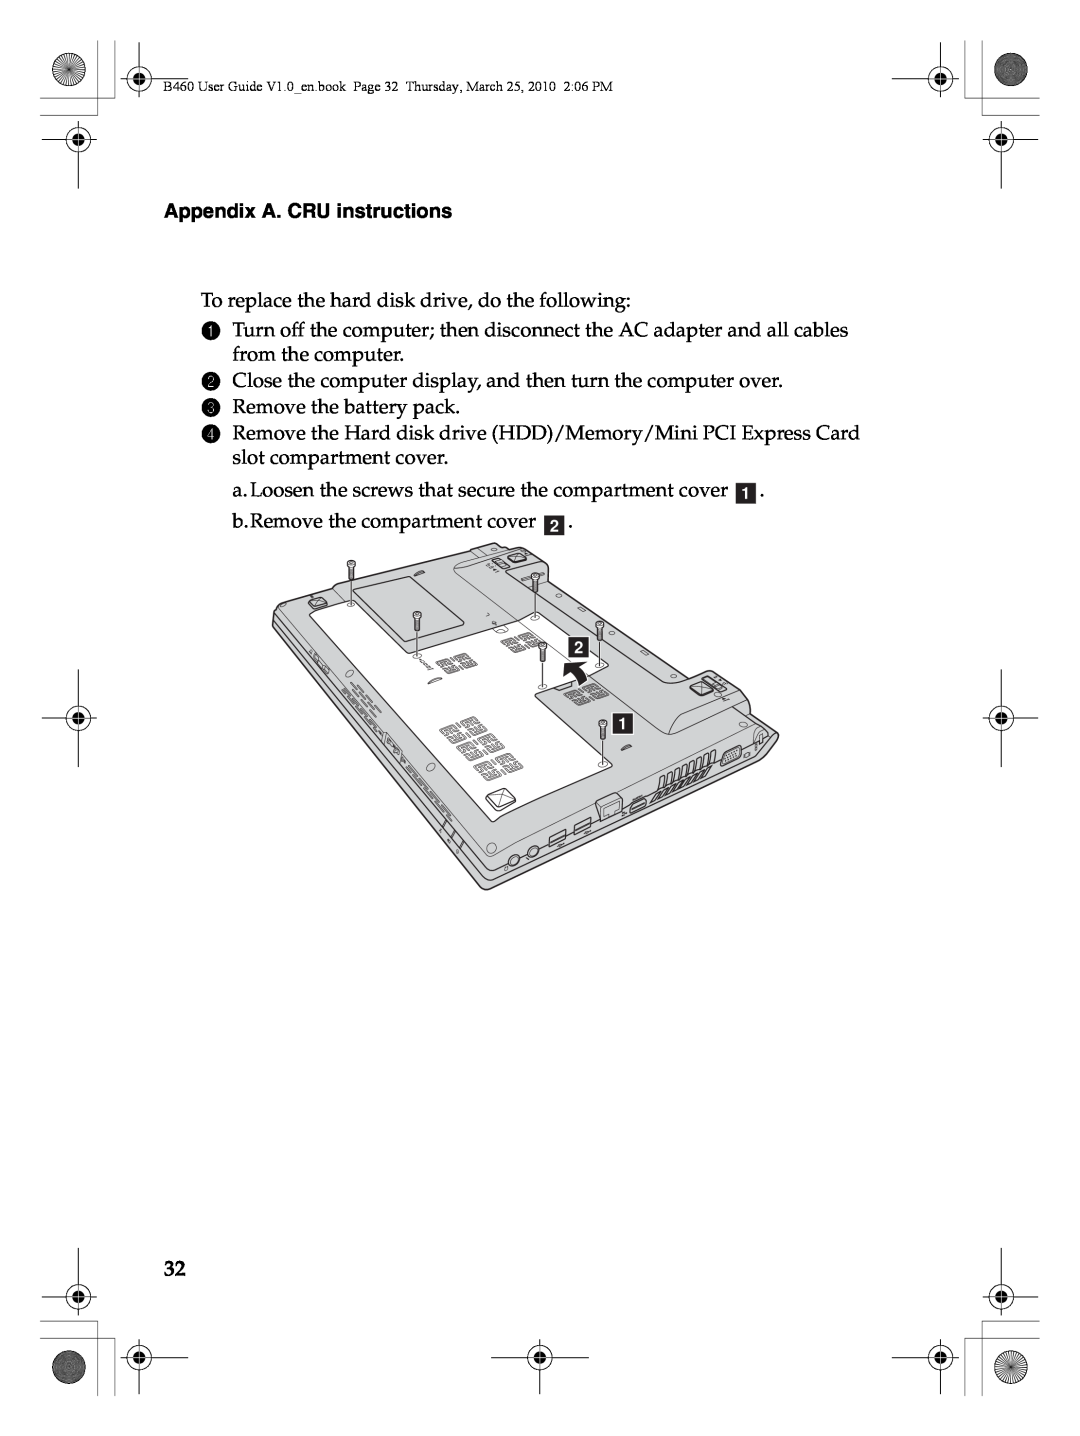 Lenovo manual Appendix A. CRU instructions, B460 User Guide V1.0en.book Page 32 Thursday, March 25, 2010 206 PM 